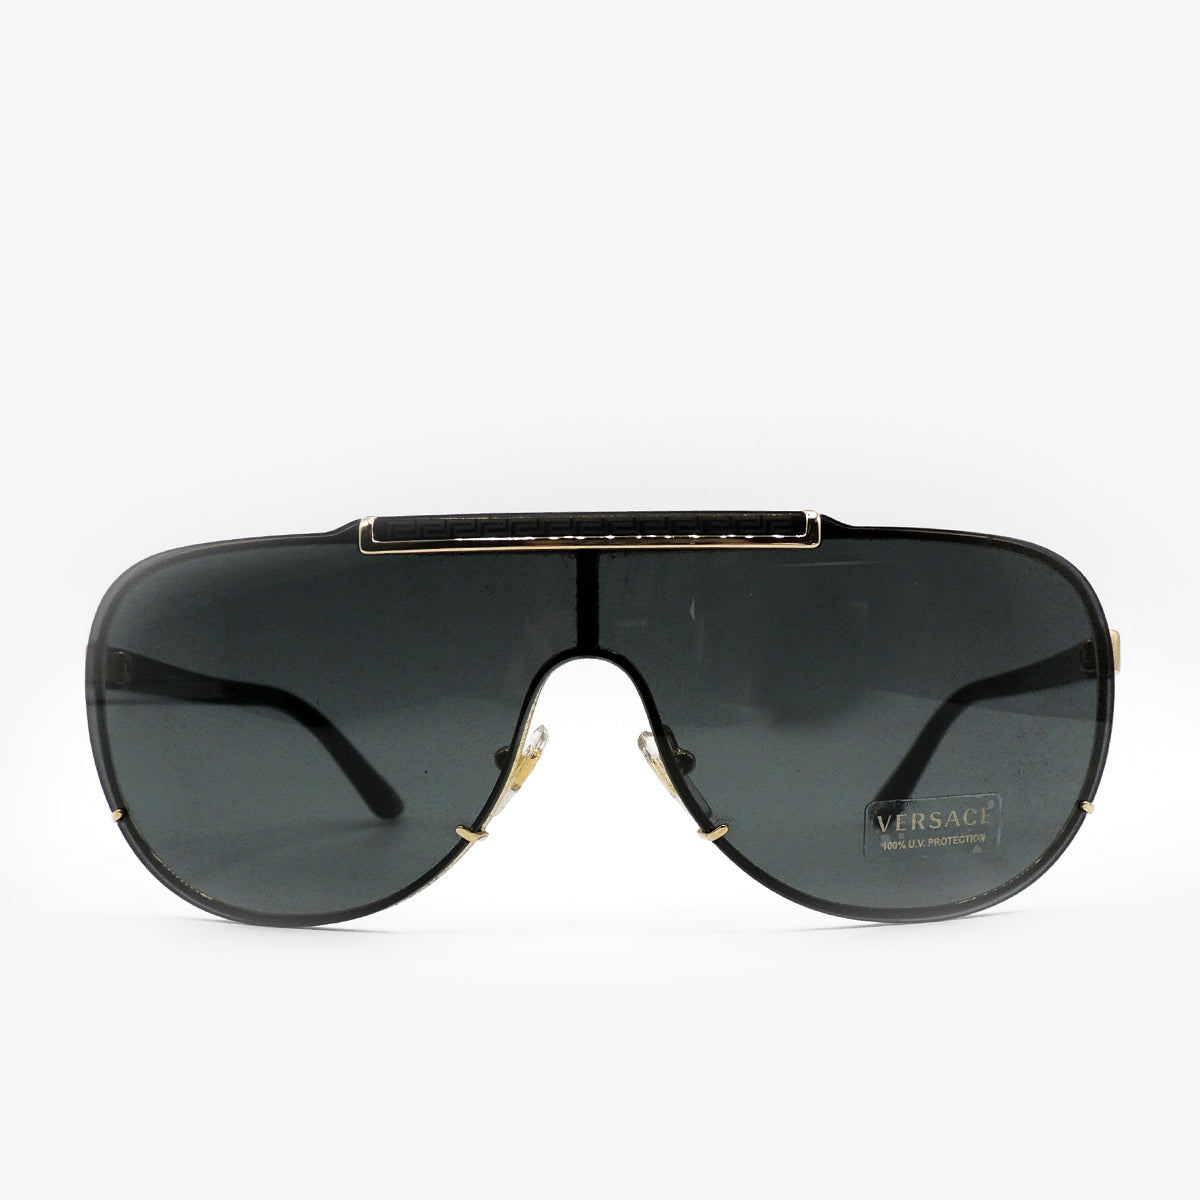 Versace Women's Black D-Frame Sunglasses VE2140